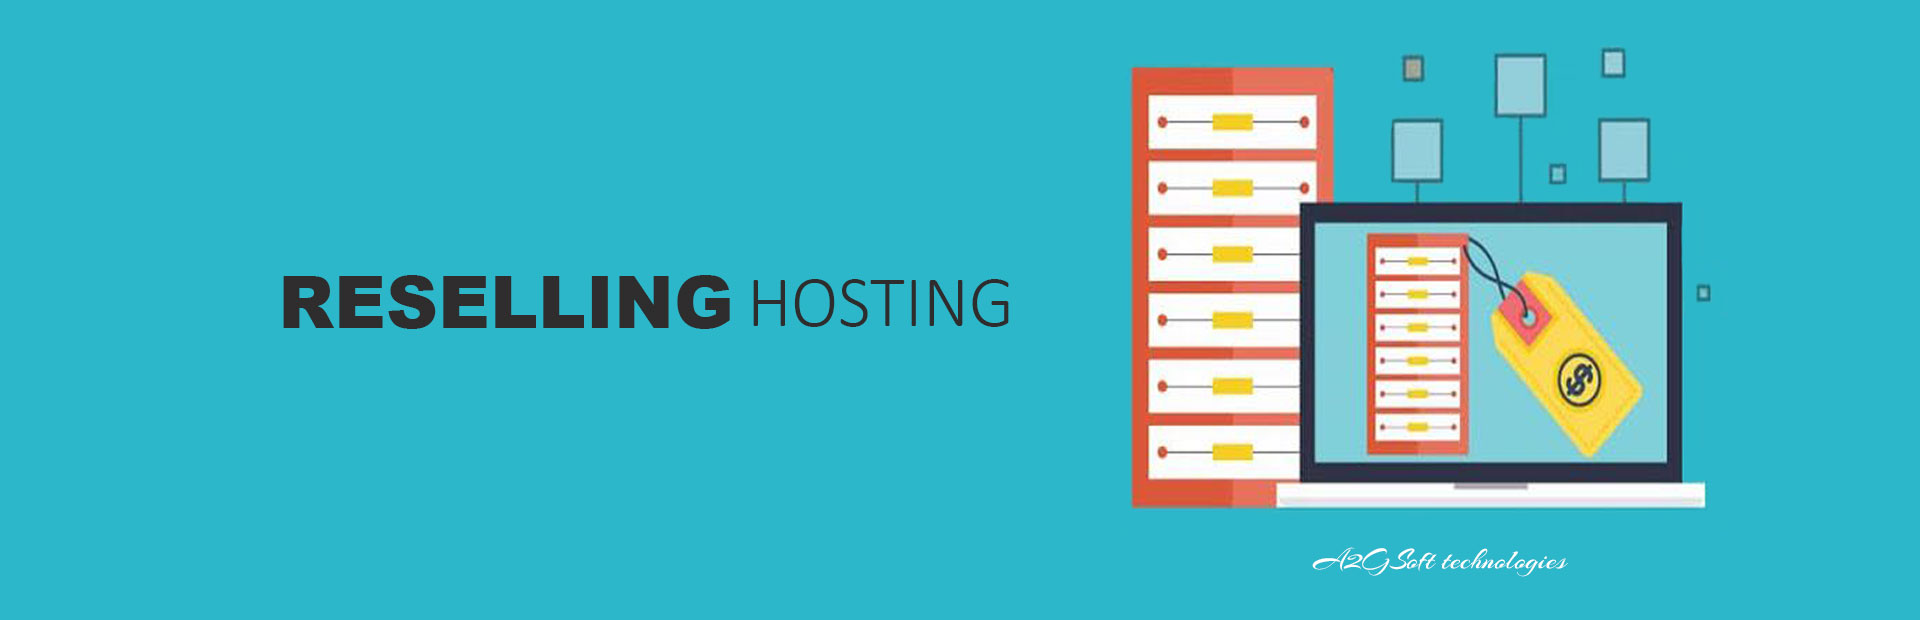 reselling hosting